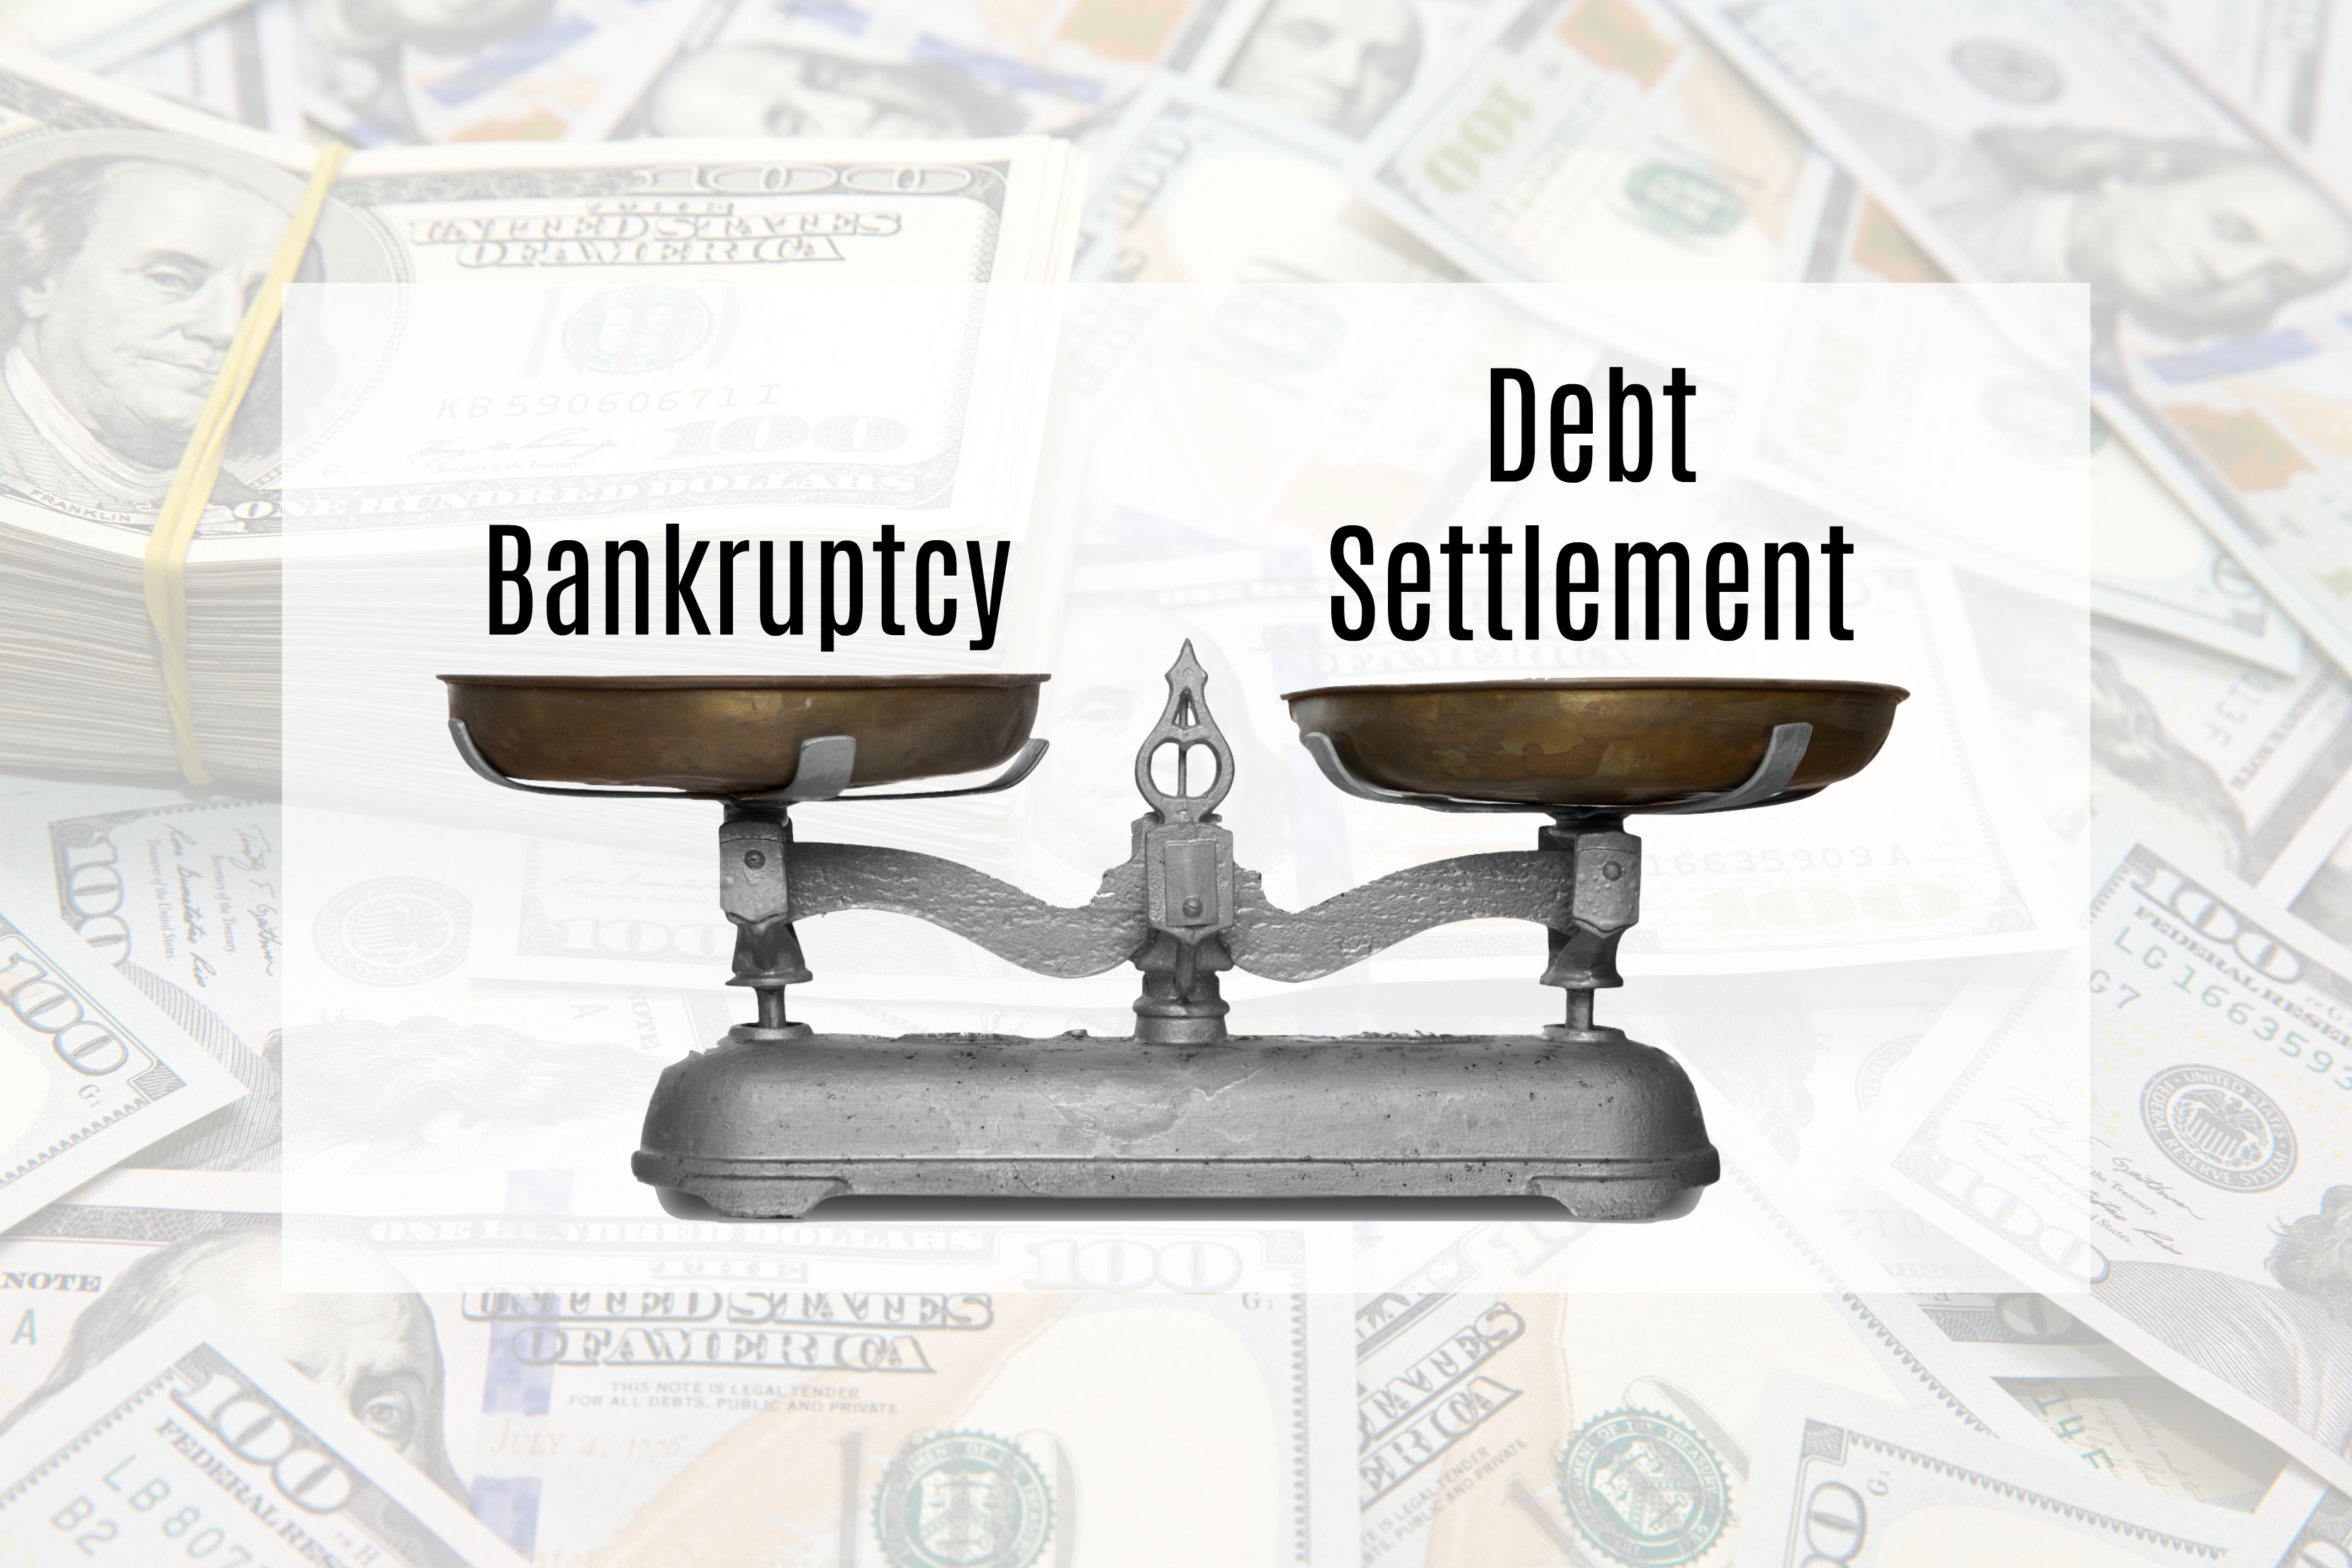 Bankruptcy vs Debt Settlement on balance